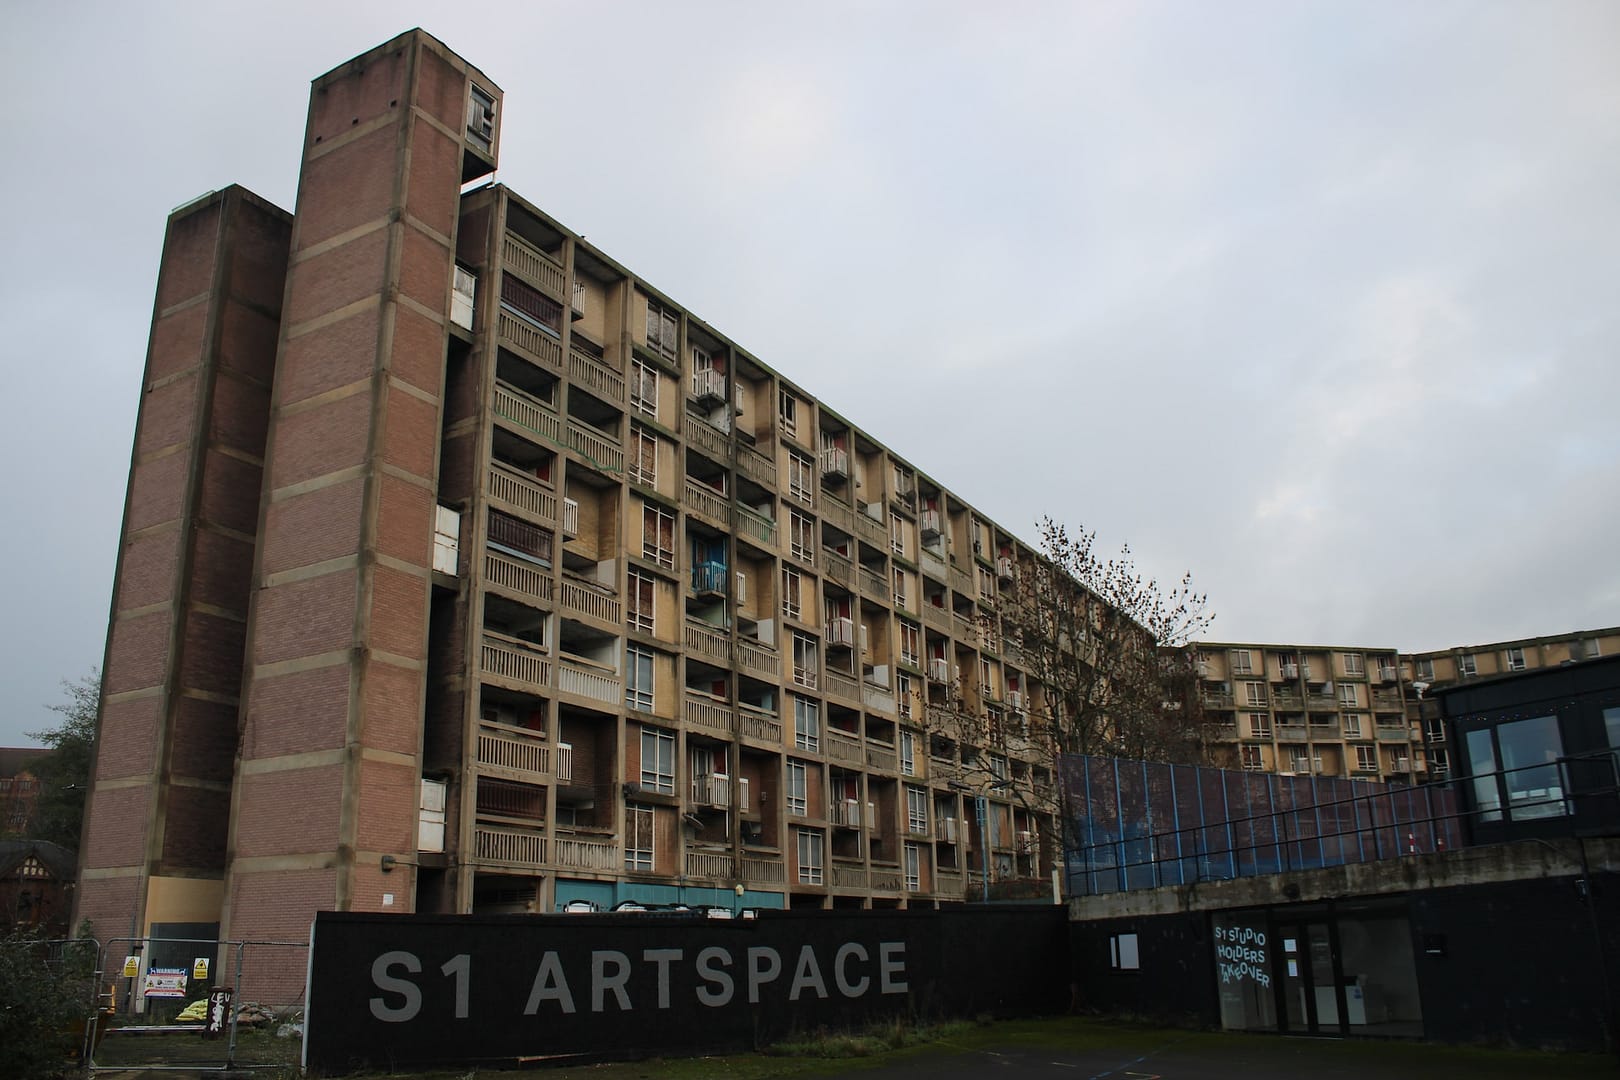 A block of flats in Sheffield